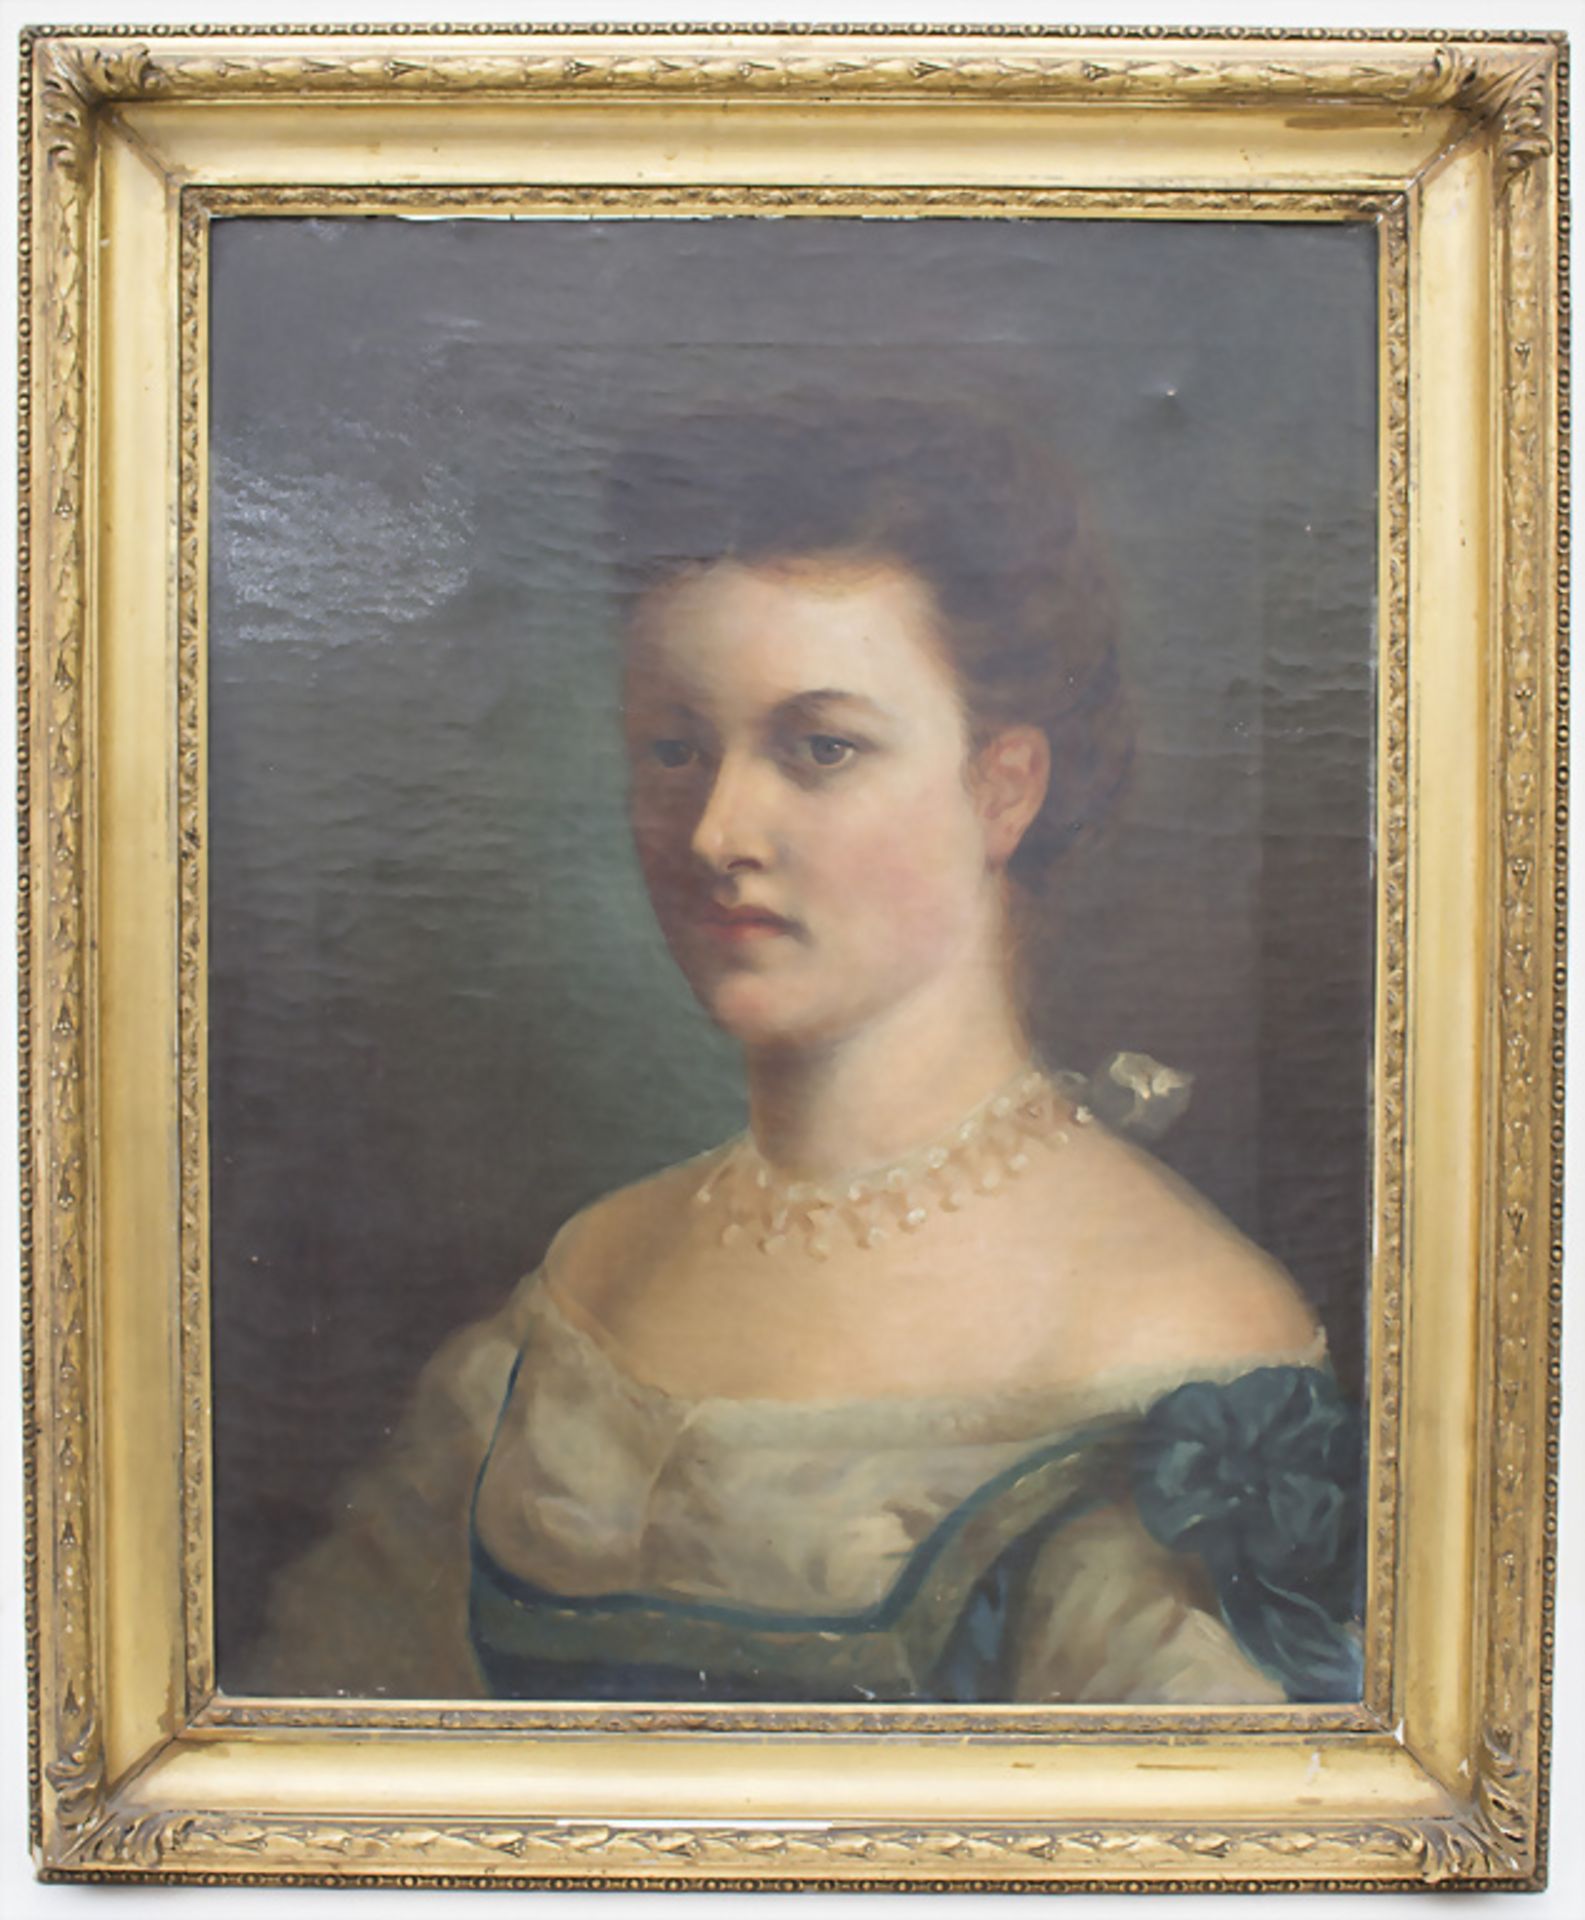 Künstler des 19. Jh., 'Porträt einer jungen Dame' / 'A portrait of a young lady' - Bild 2 aus 4